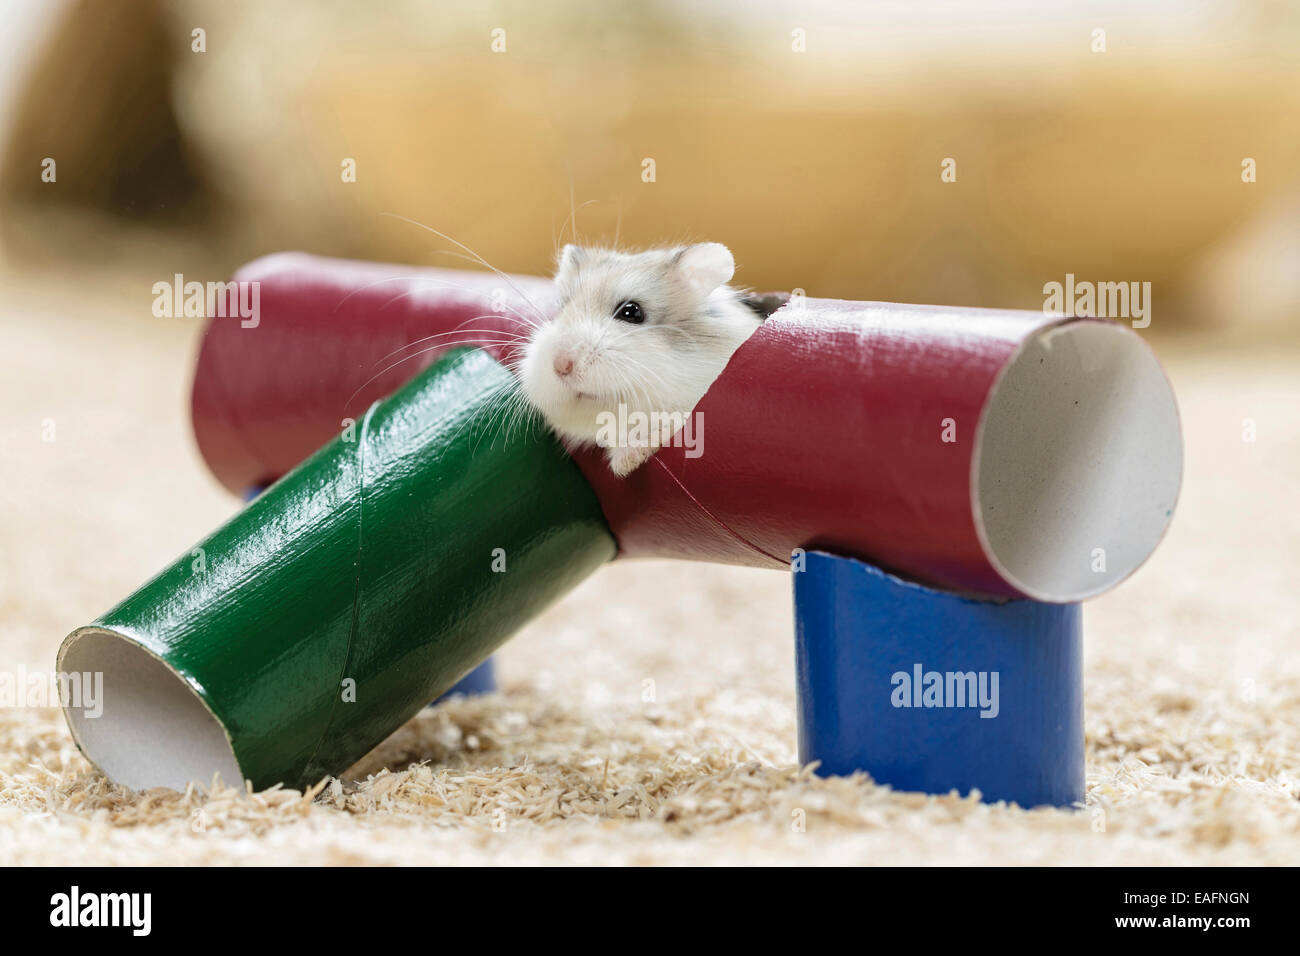 Roborovski Hamster Phodopus roborovskii in home-made tunnel system Stock Photo